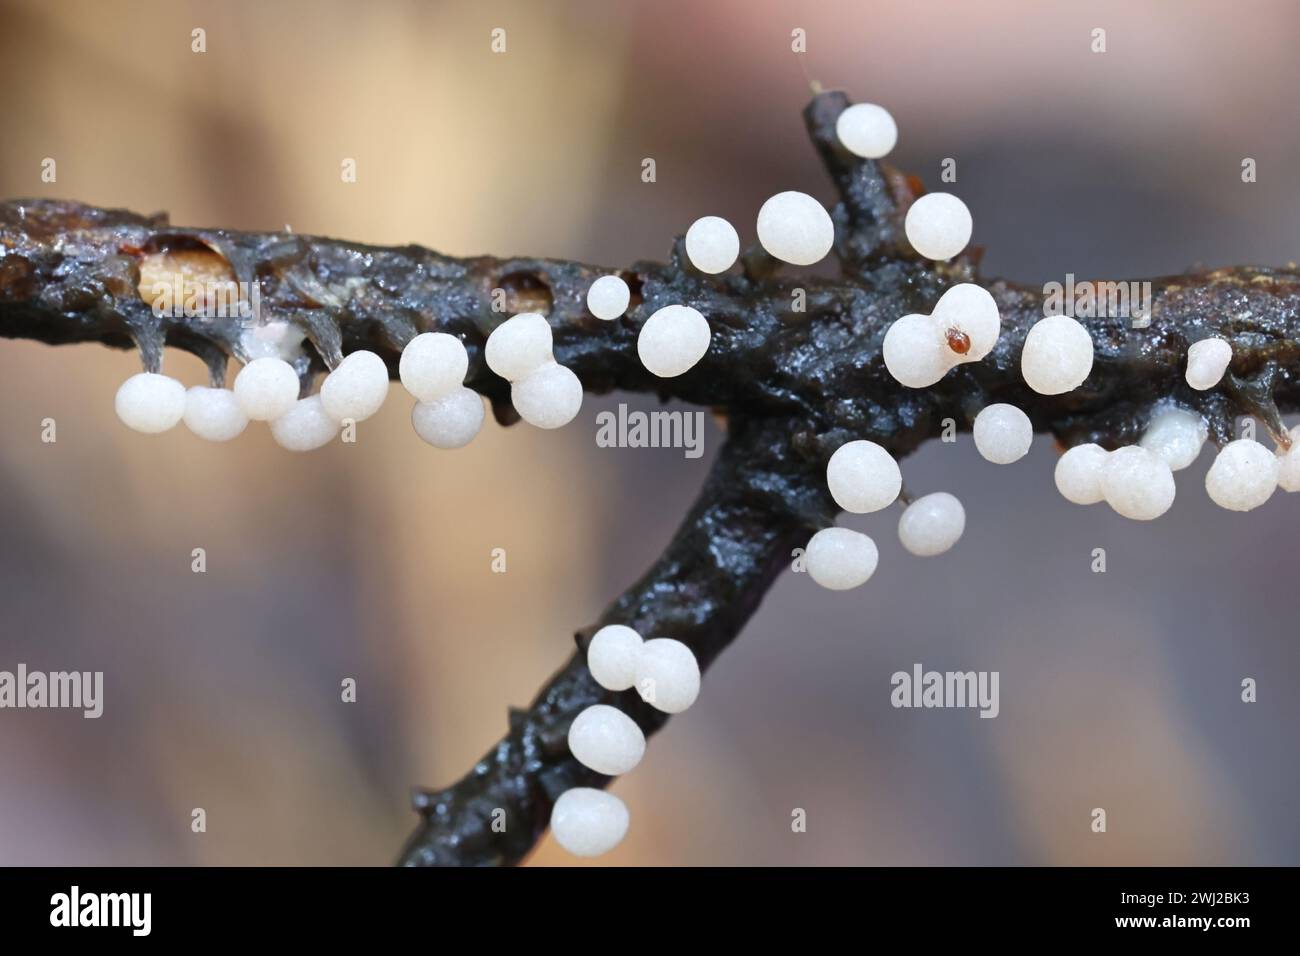 Didymium melanospermum, slime mold from Finland, no common English name Stock Photo